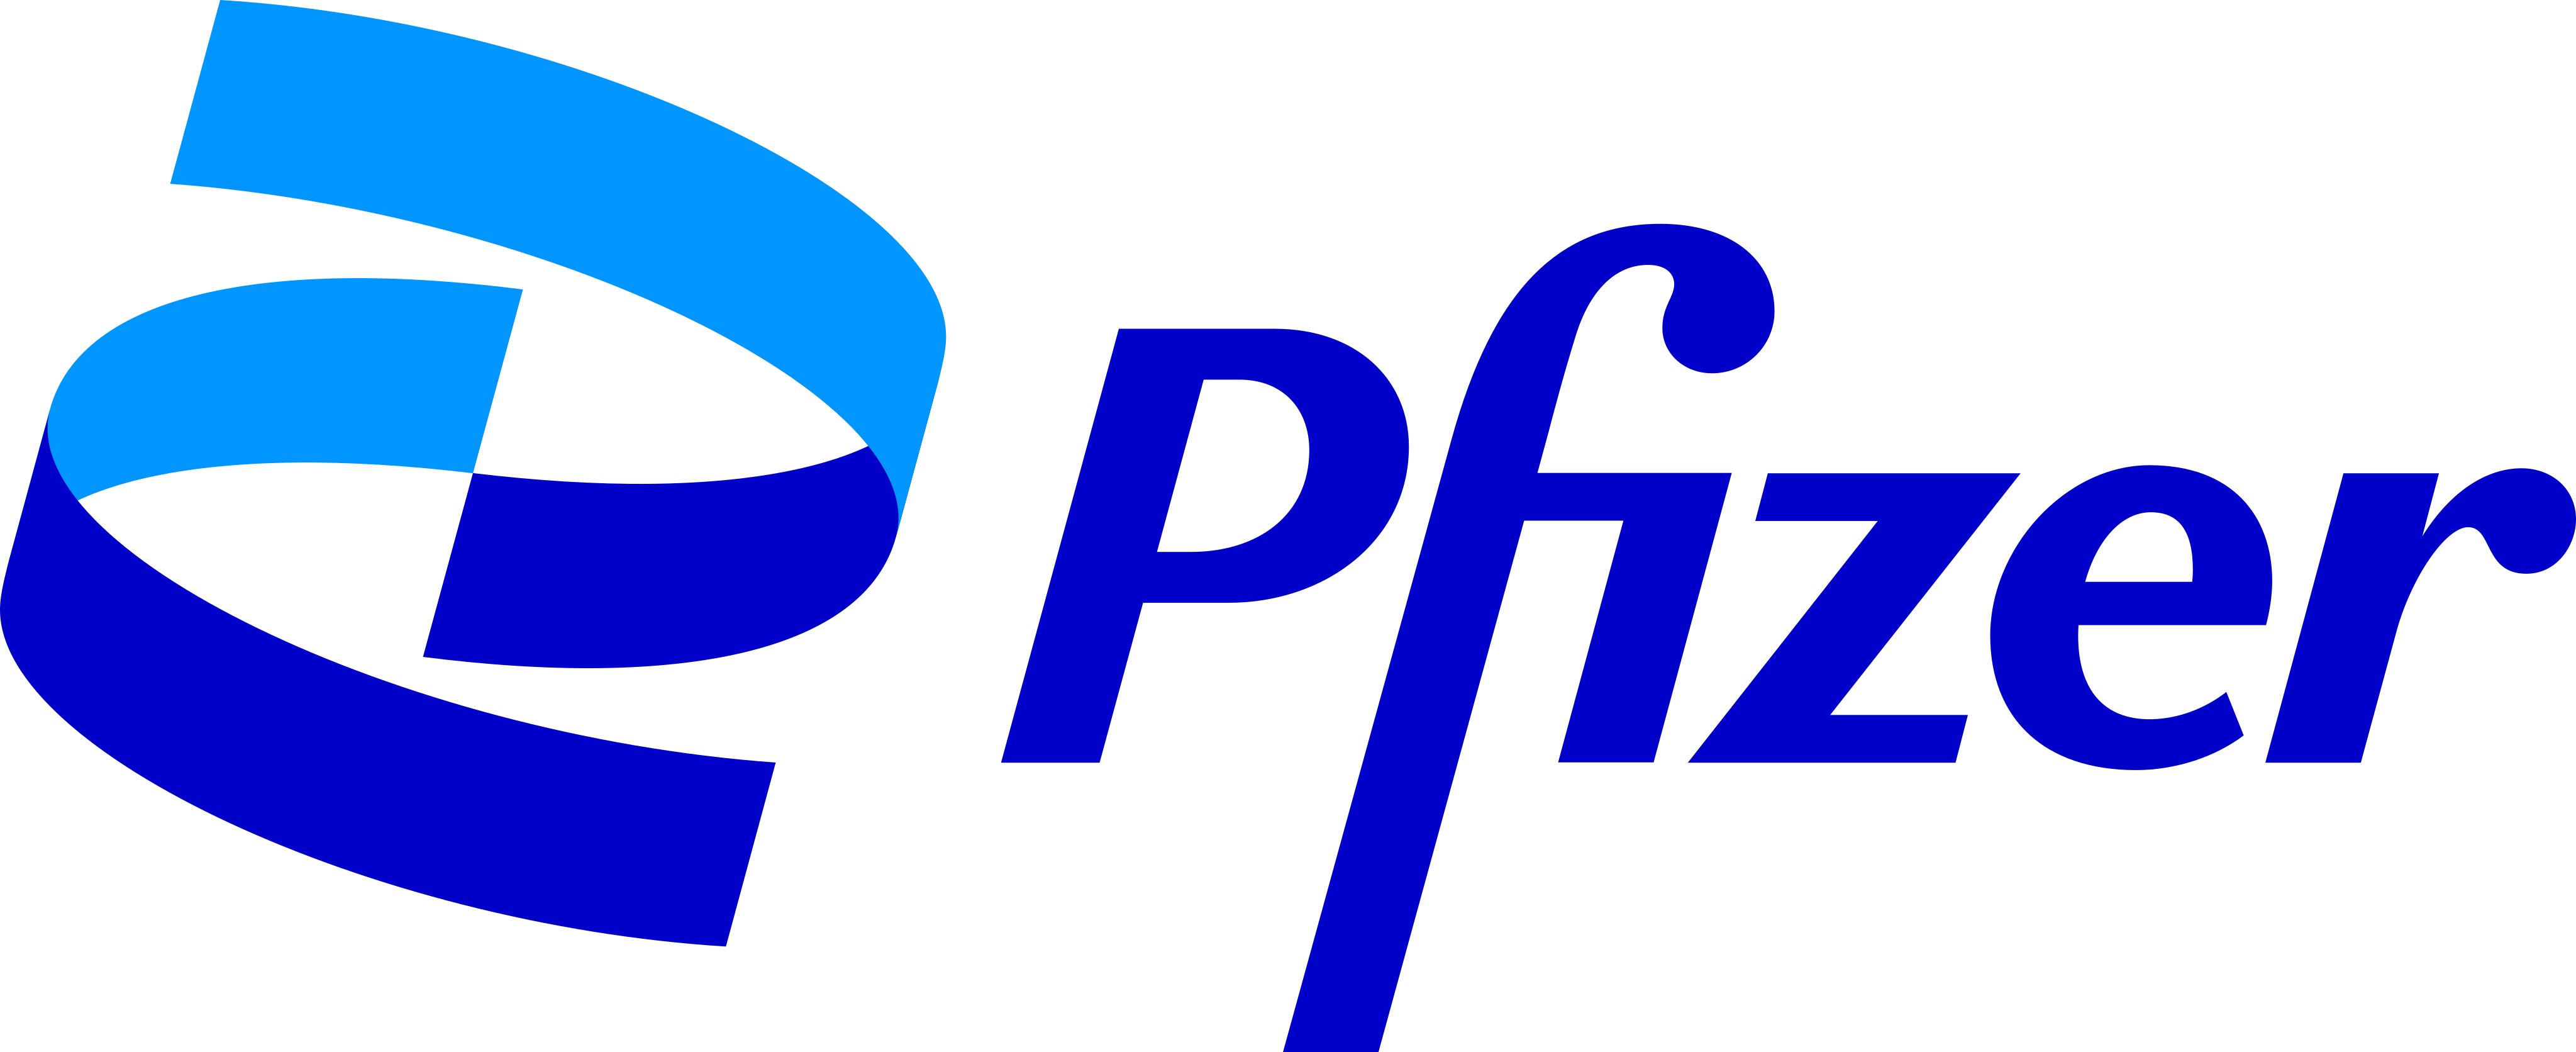 Indústria farmacêutica - pfizer